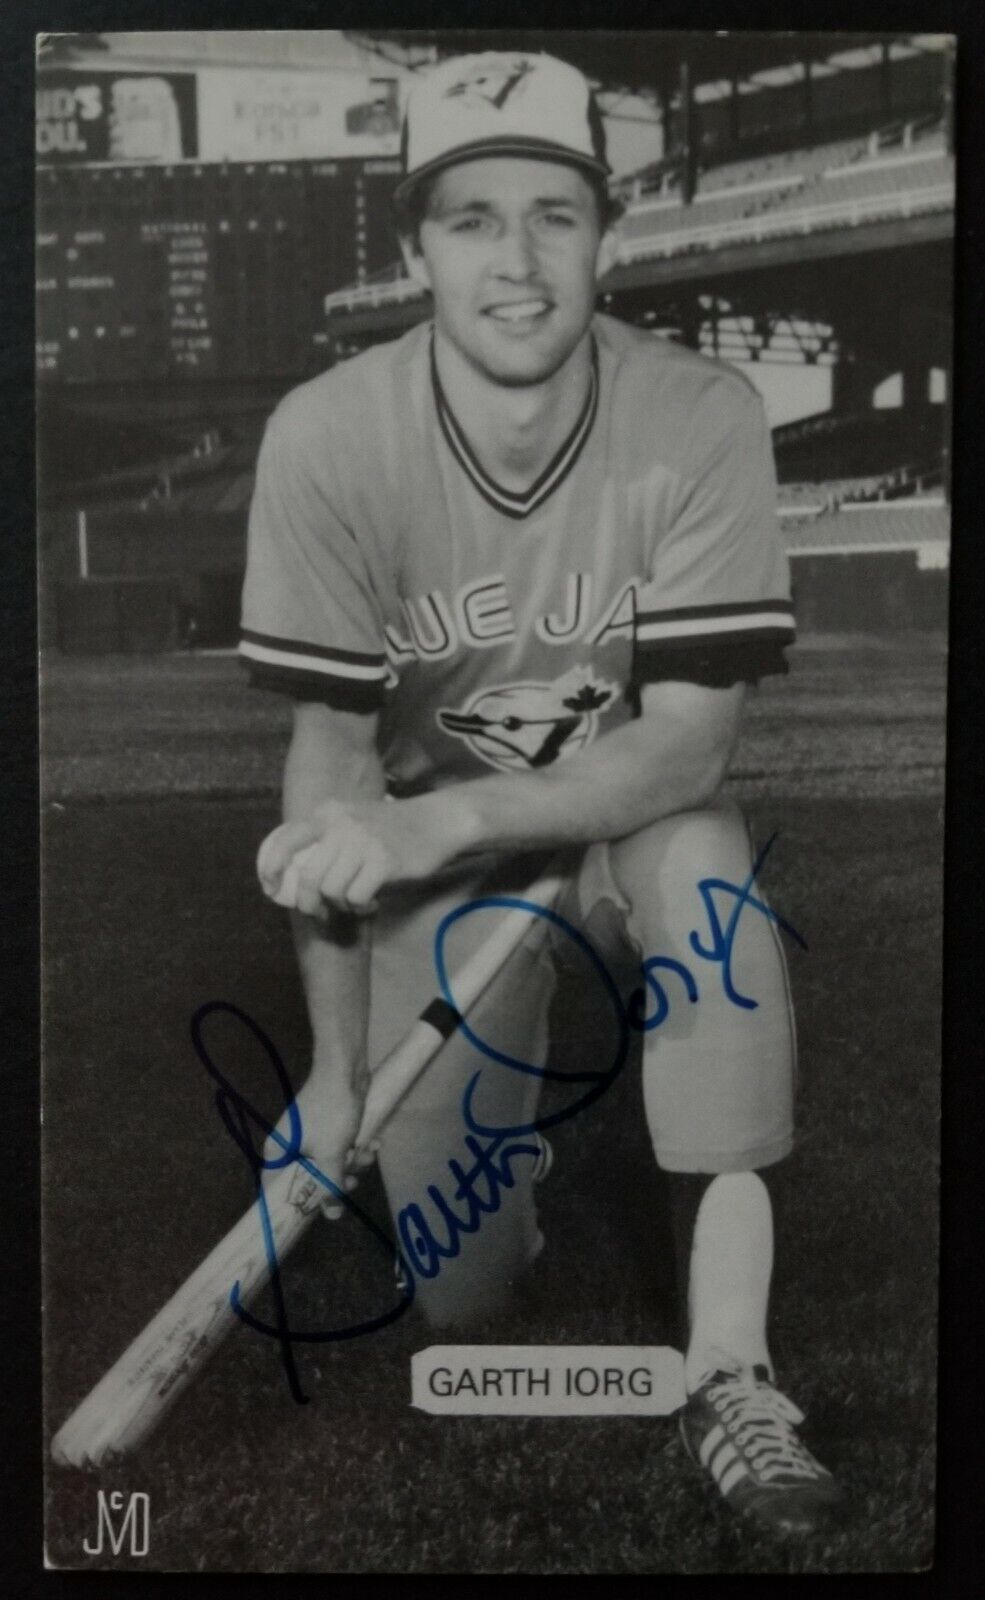 1980 MLB Baseball Toronto Blue Jays Garth Iorg Autographed J D McCarthy Photo